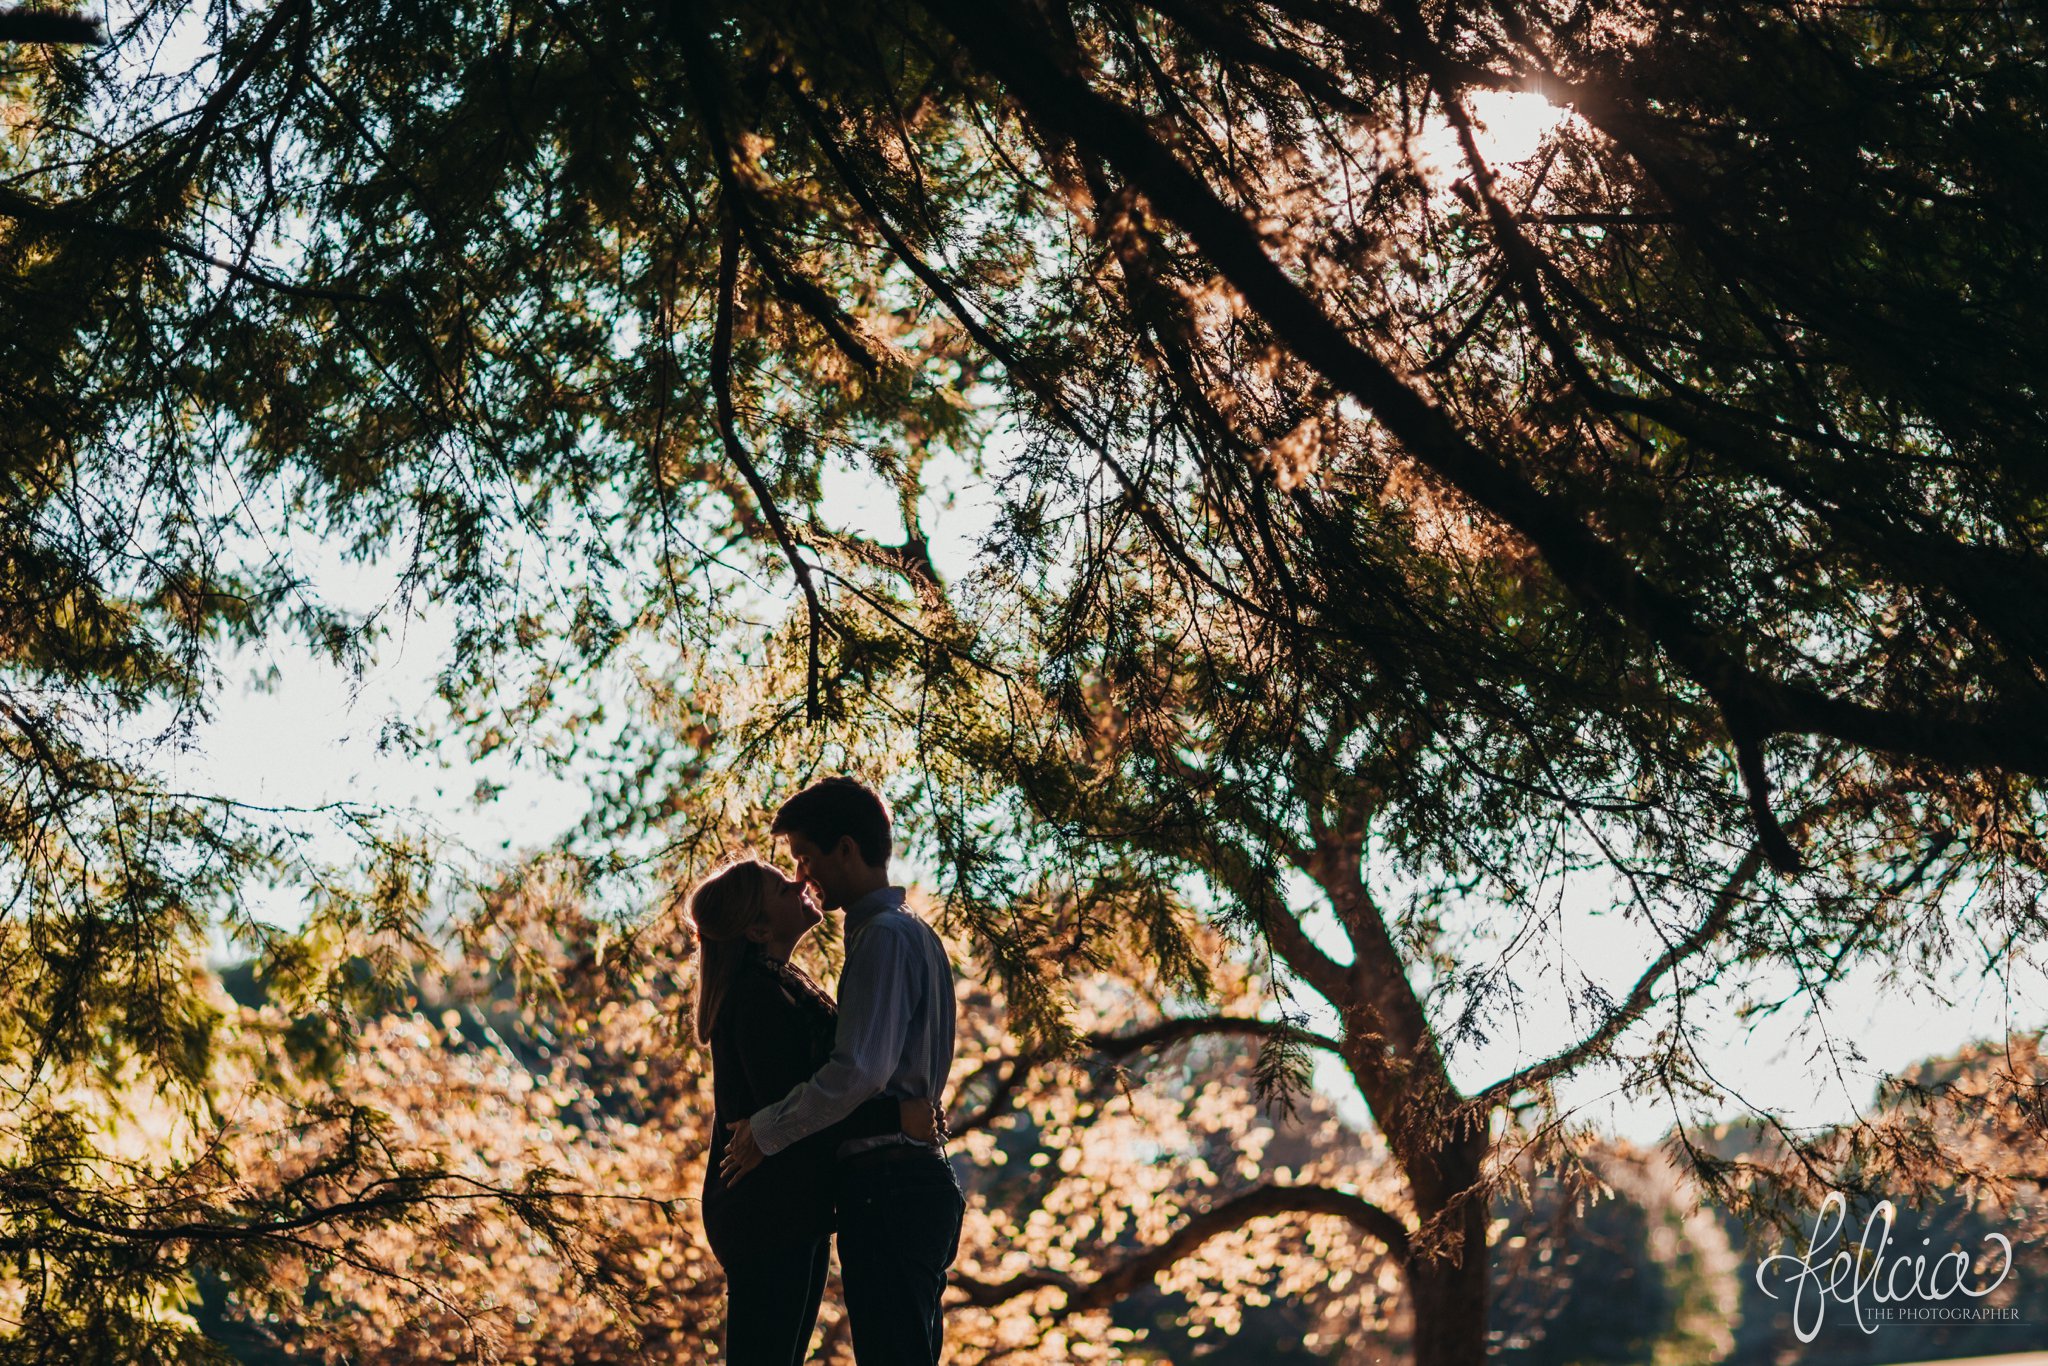 images by feliciathephotographer.com | wedding photographer | kansas city missouri | engagement | contrast | golden hour | sunset | true love | romantic | trees | forest | classic | 